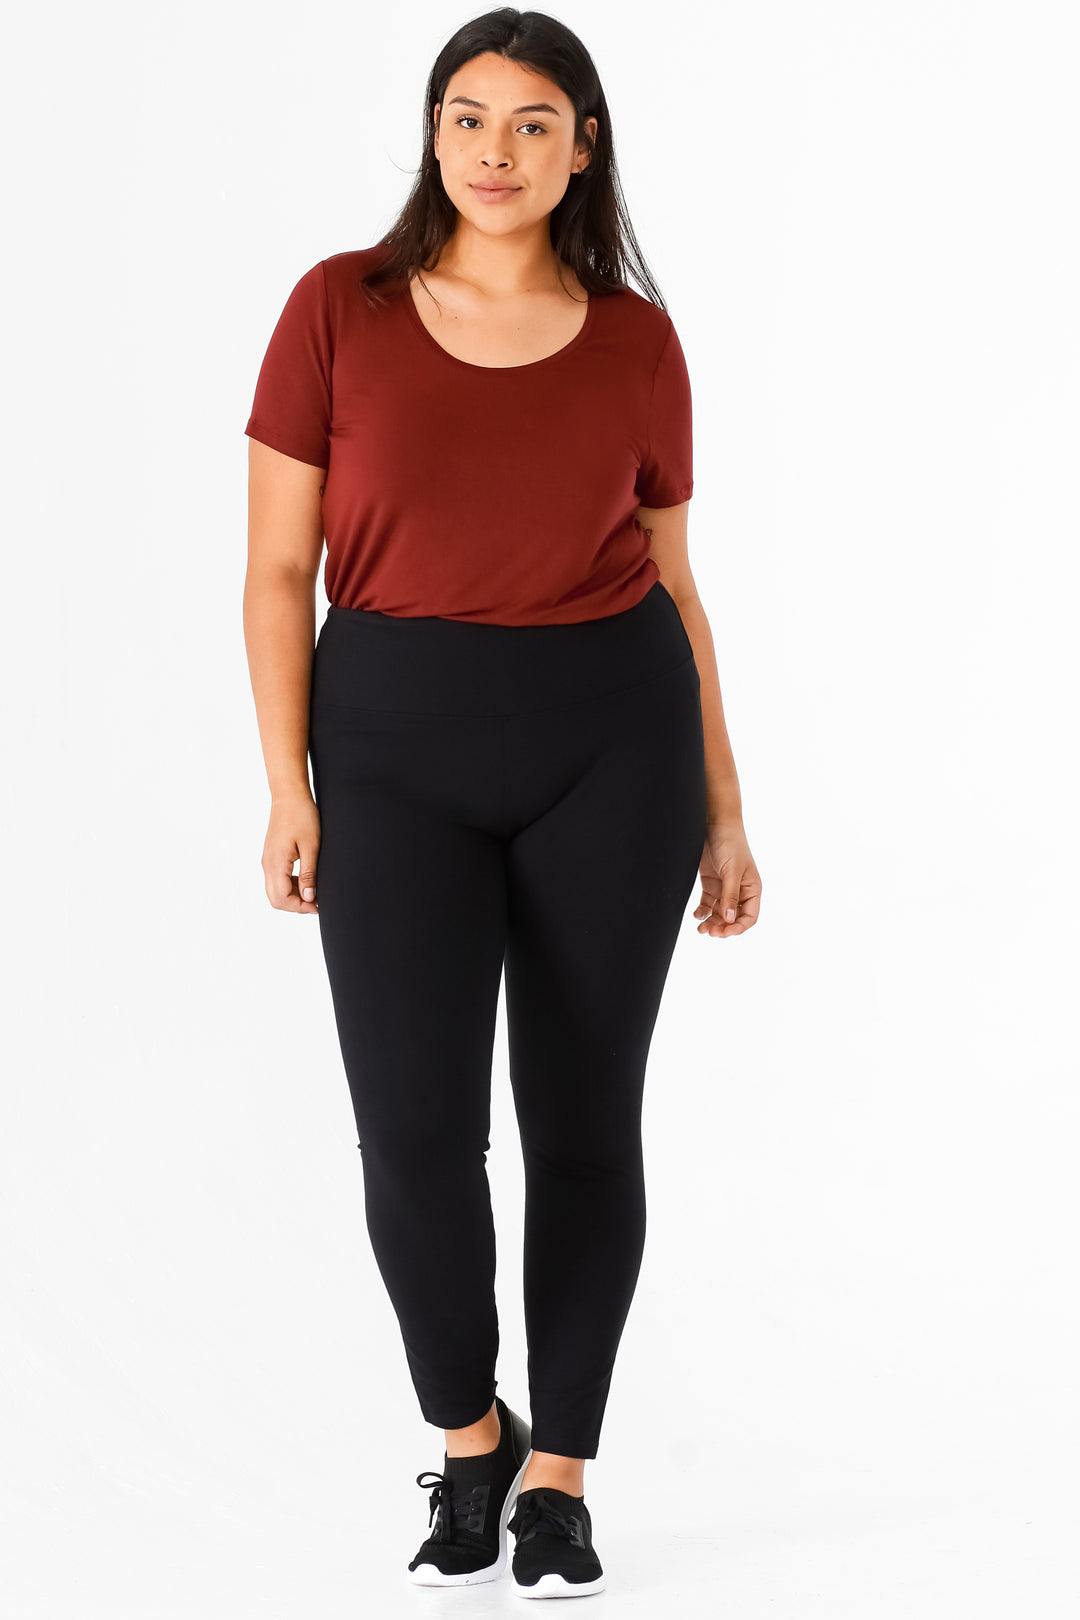 Terra & Sky Women's Plus Size Skinny Ponte Pants - Black, 2X at   Women's Clothing store